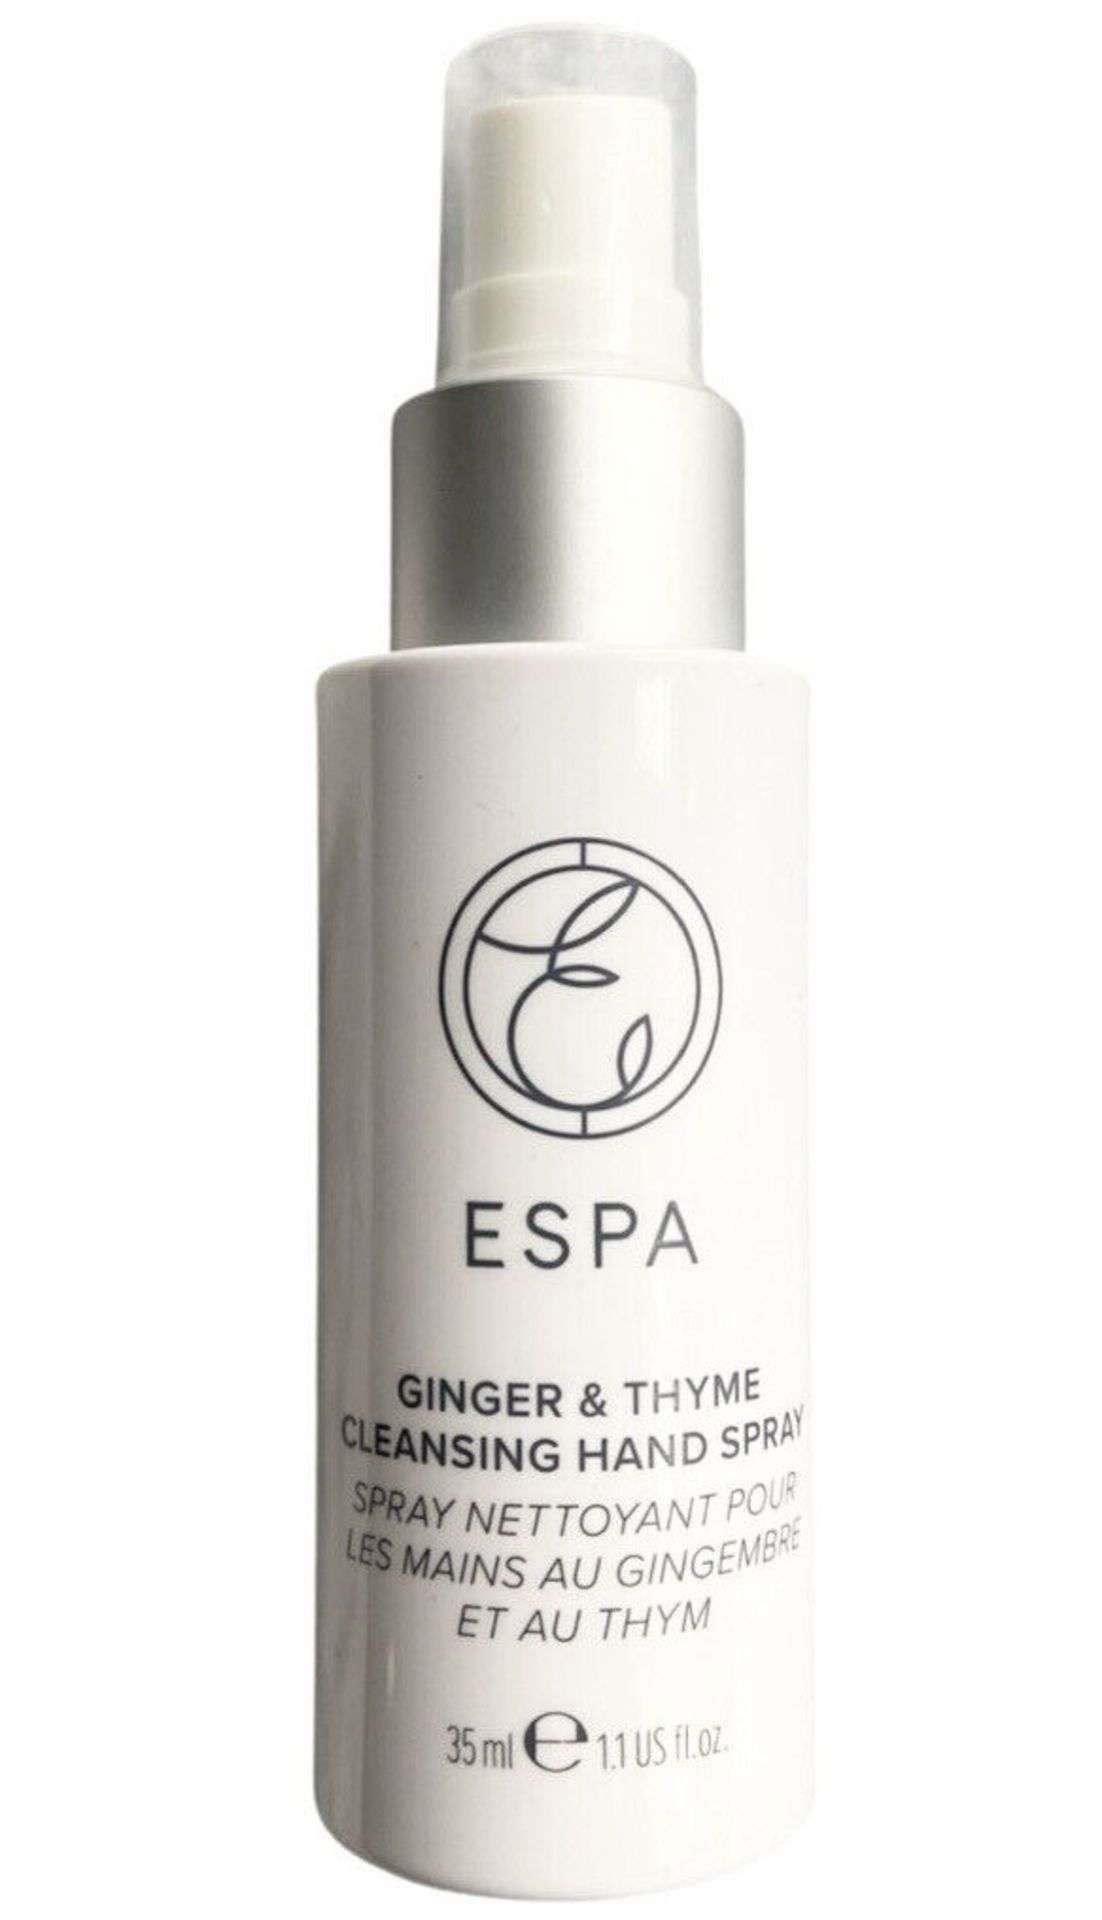 35x BRAND NEW ESPA Ginger & Thyme Cleansing Hand Spray 35ml RRP £8 EACH. EBR5. ESPA's Ginger & Thyme